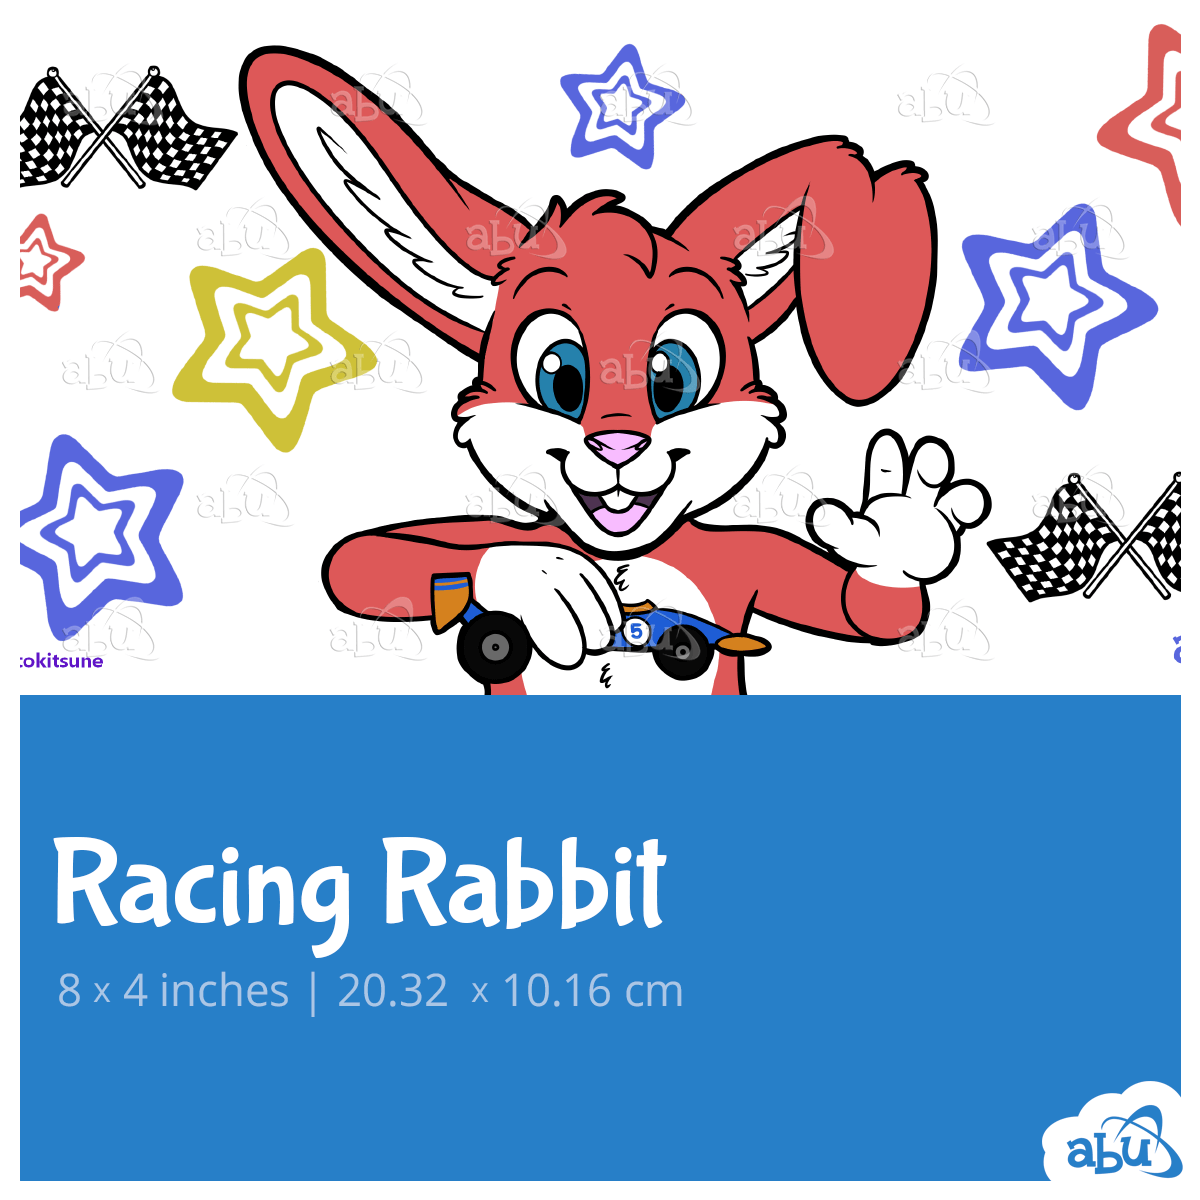 Racing Rabbit - ABUniverse Europe